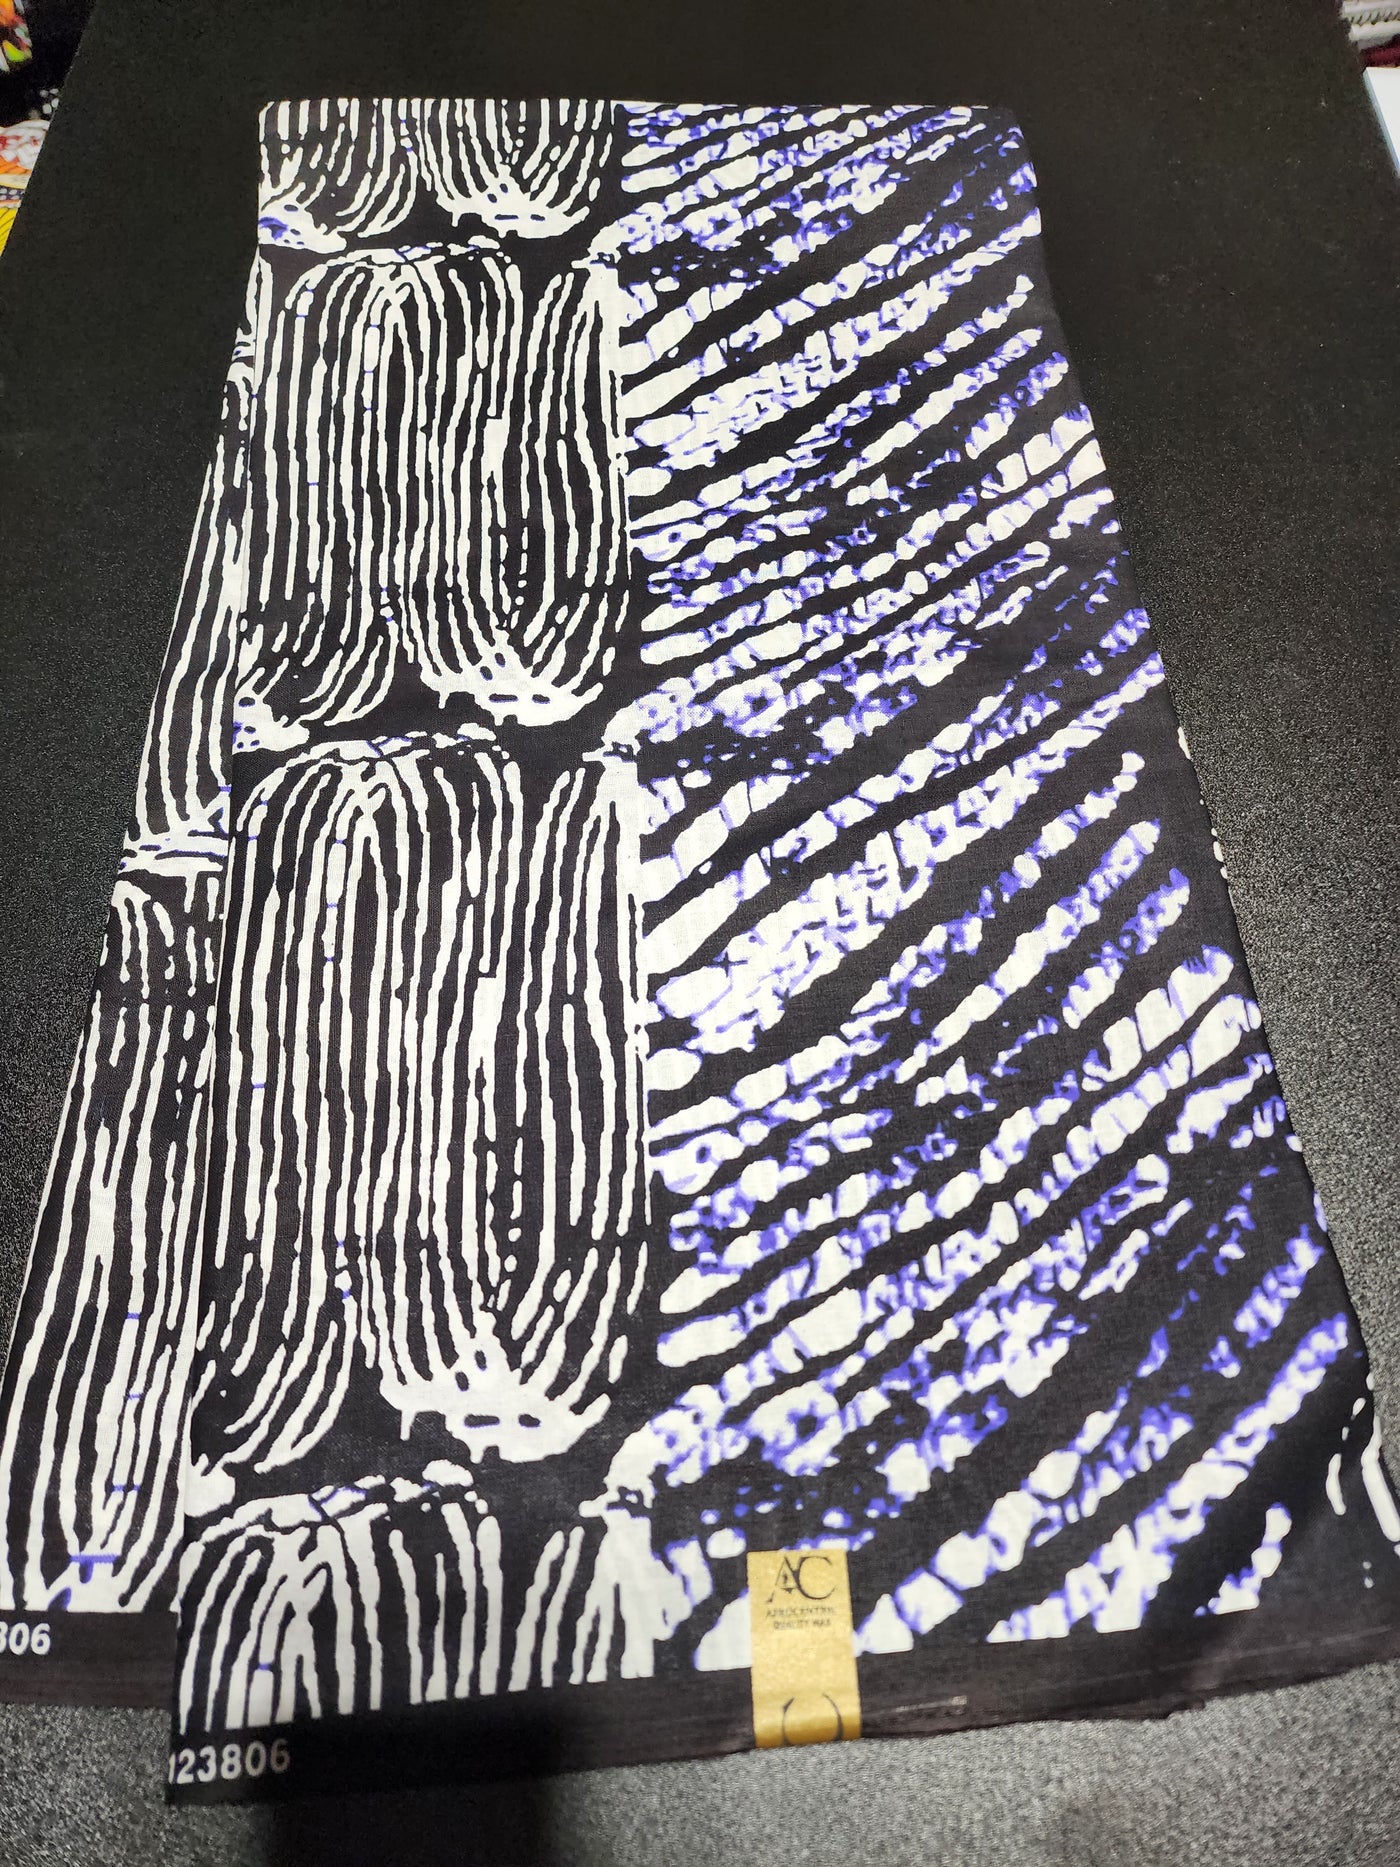 Monochrome Tie Dye Adire Ankara Print Fabric ACS2075